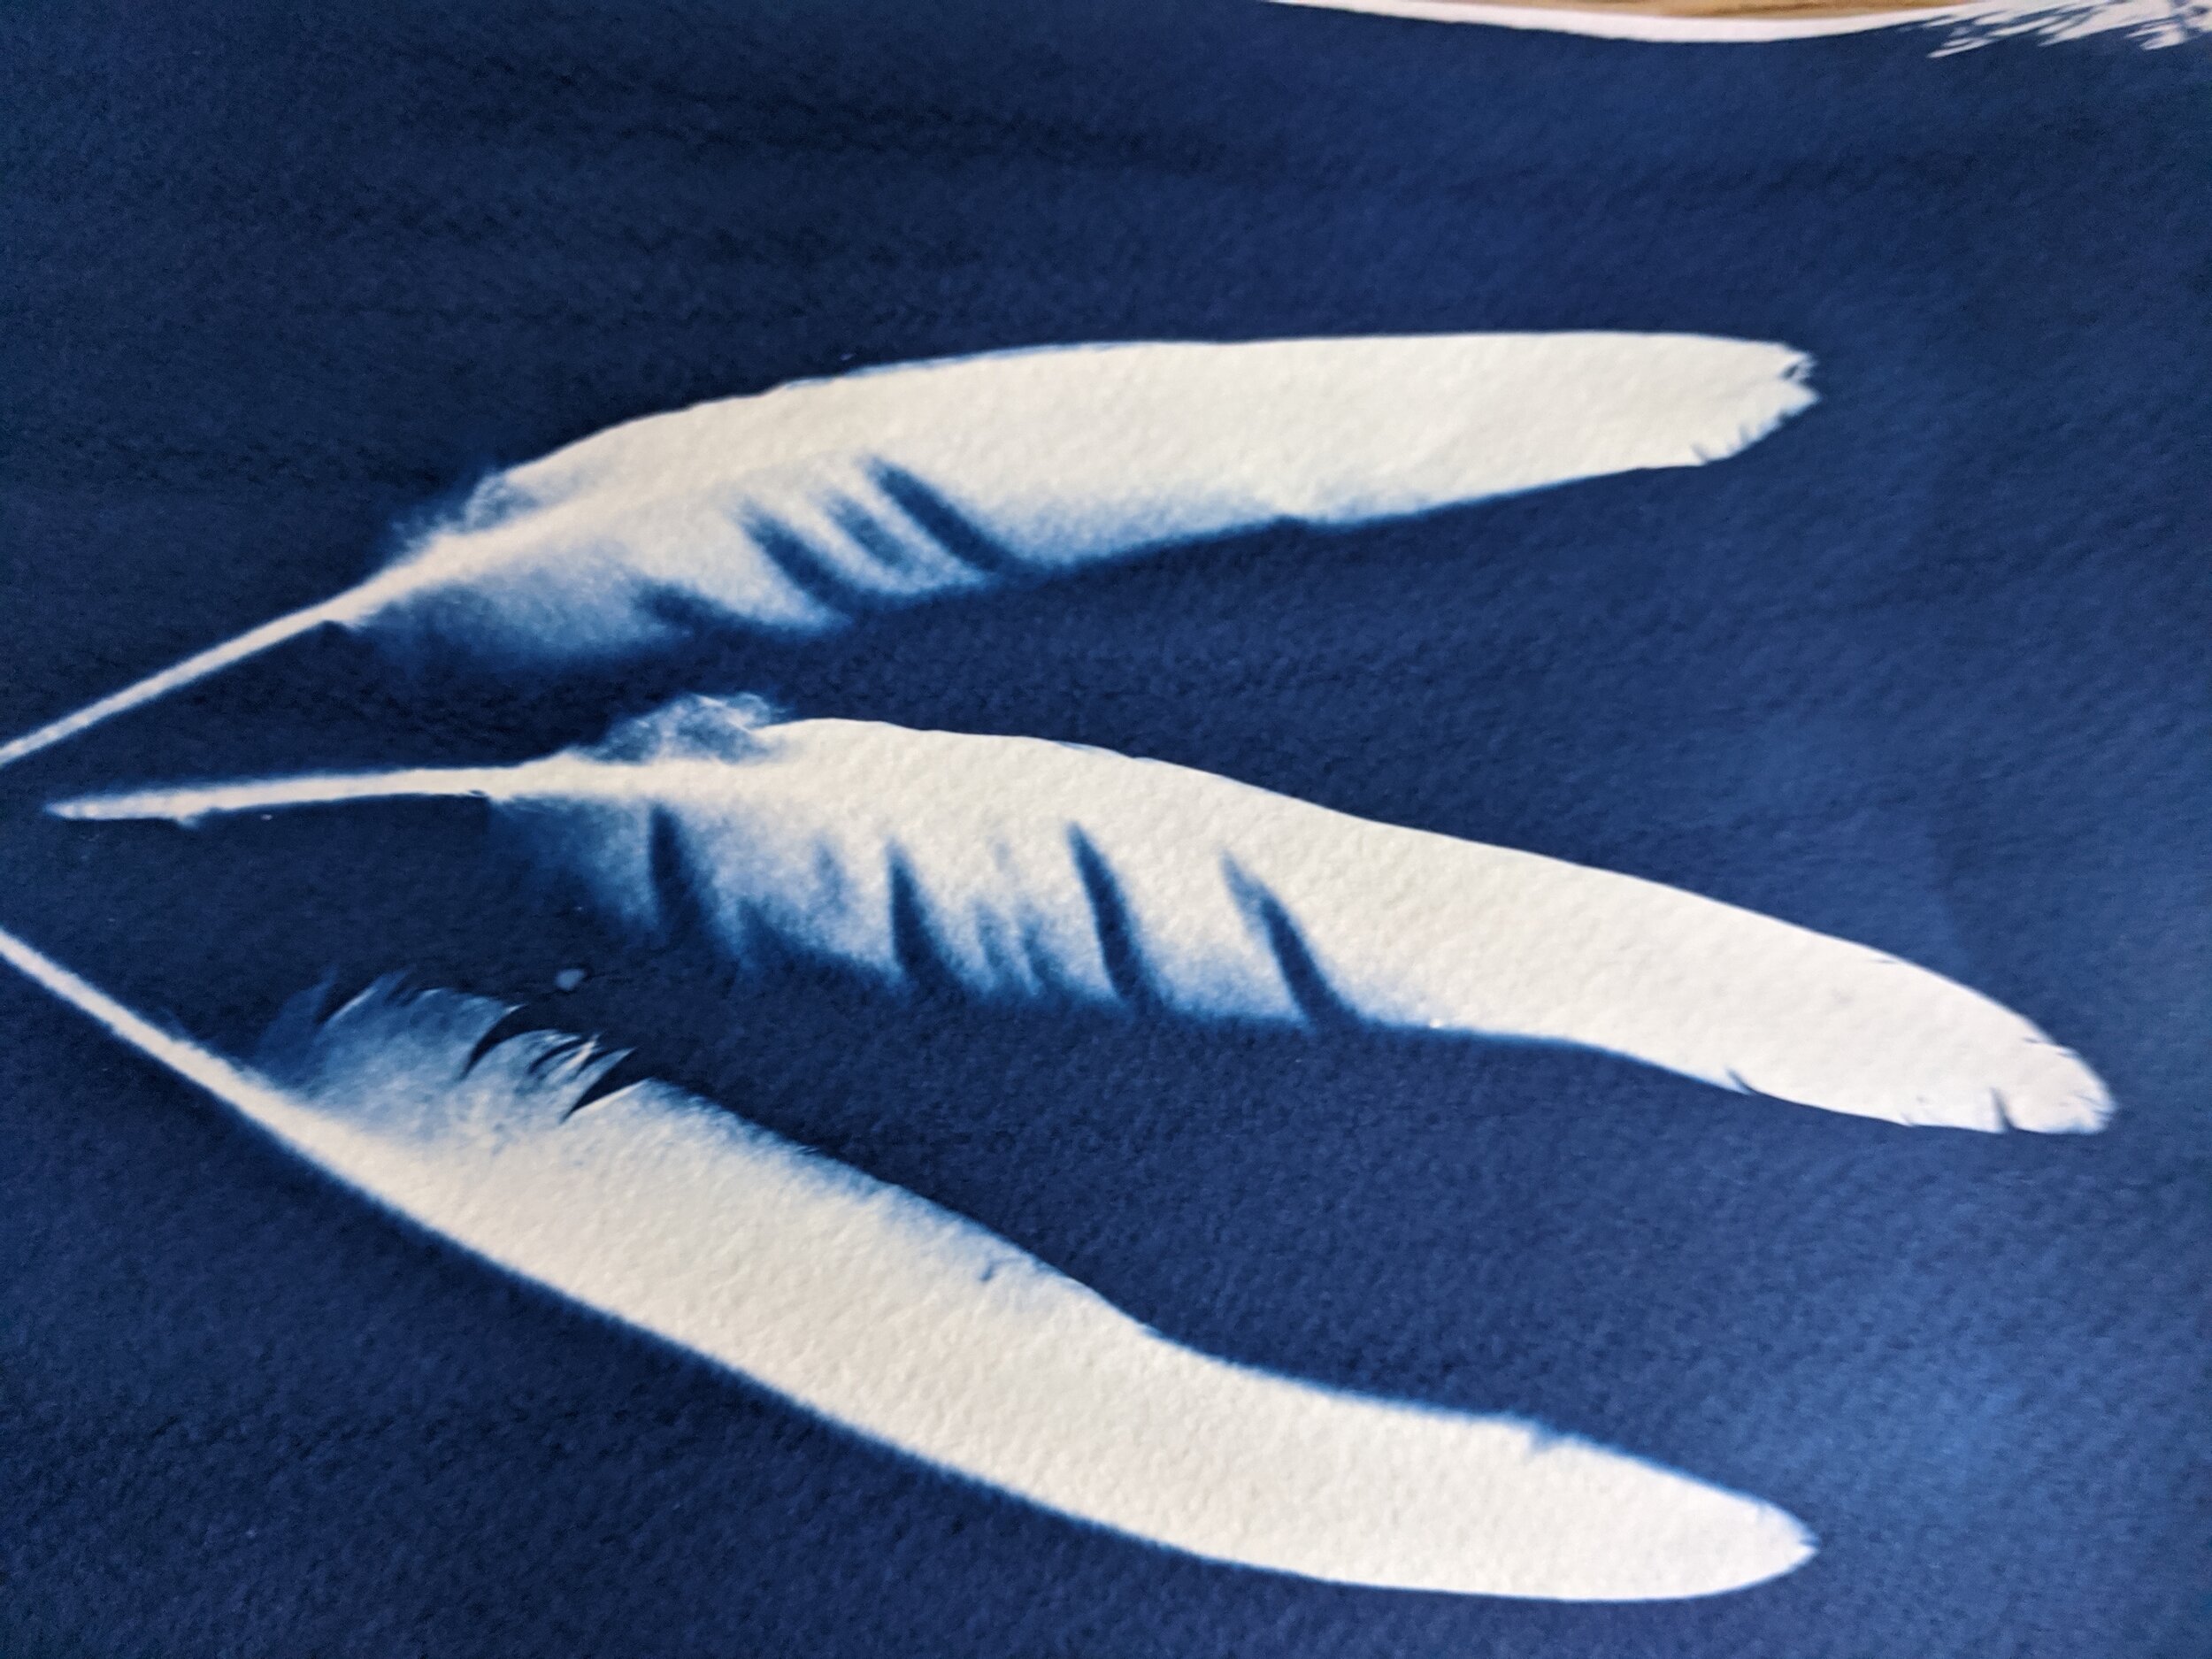 garden feathers, cyanotype